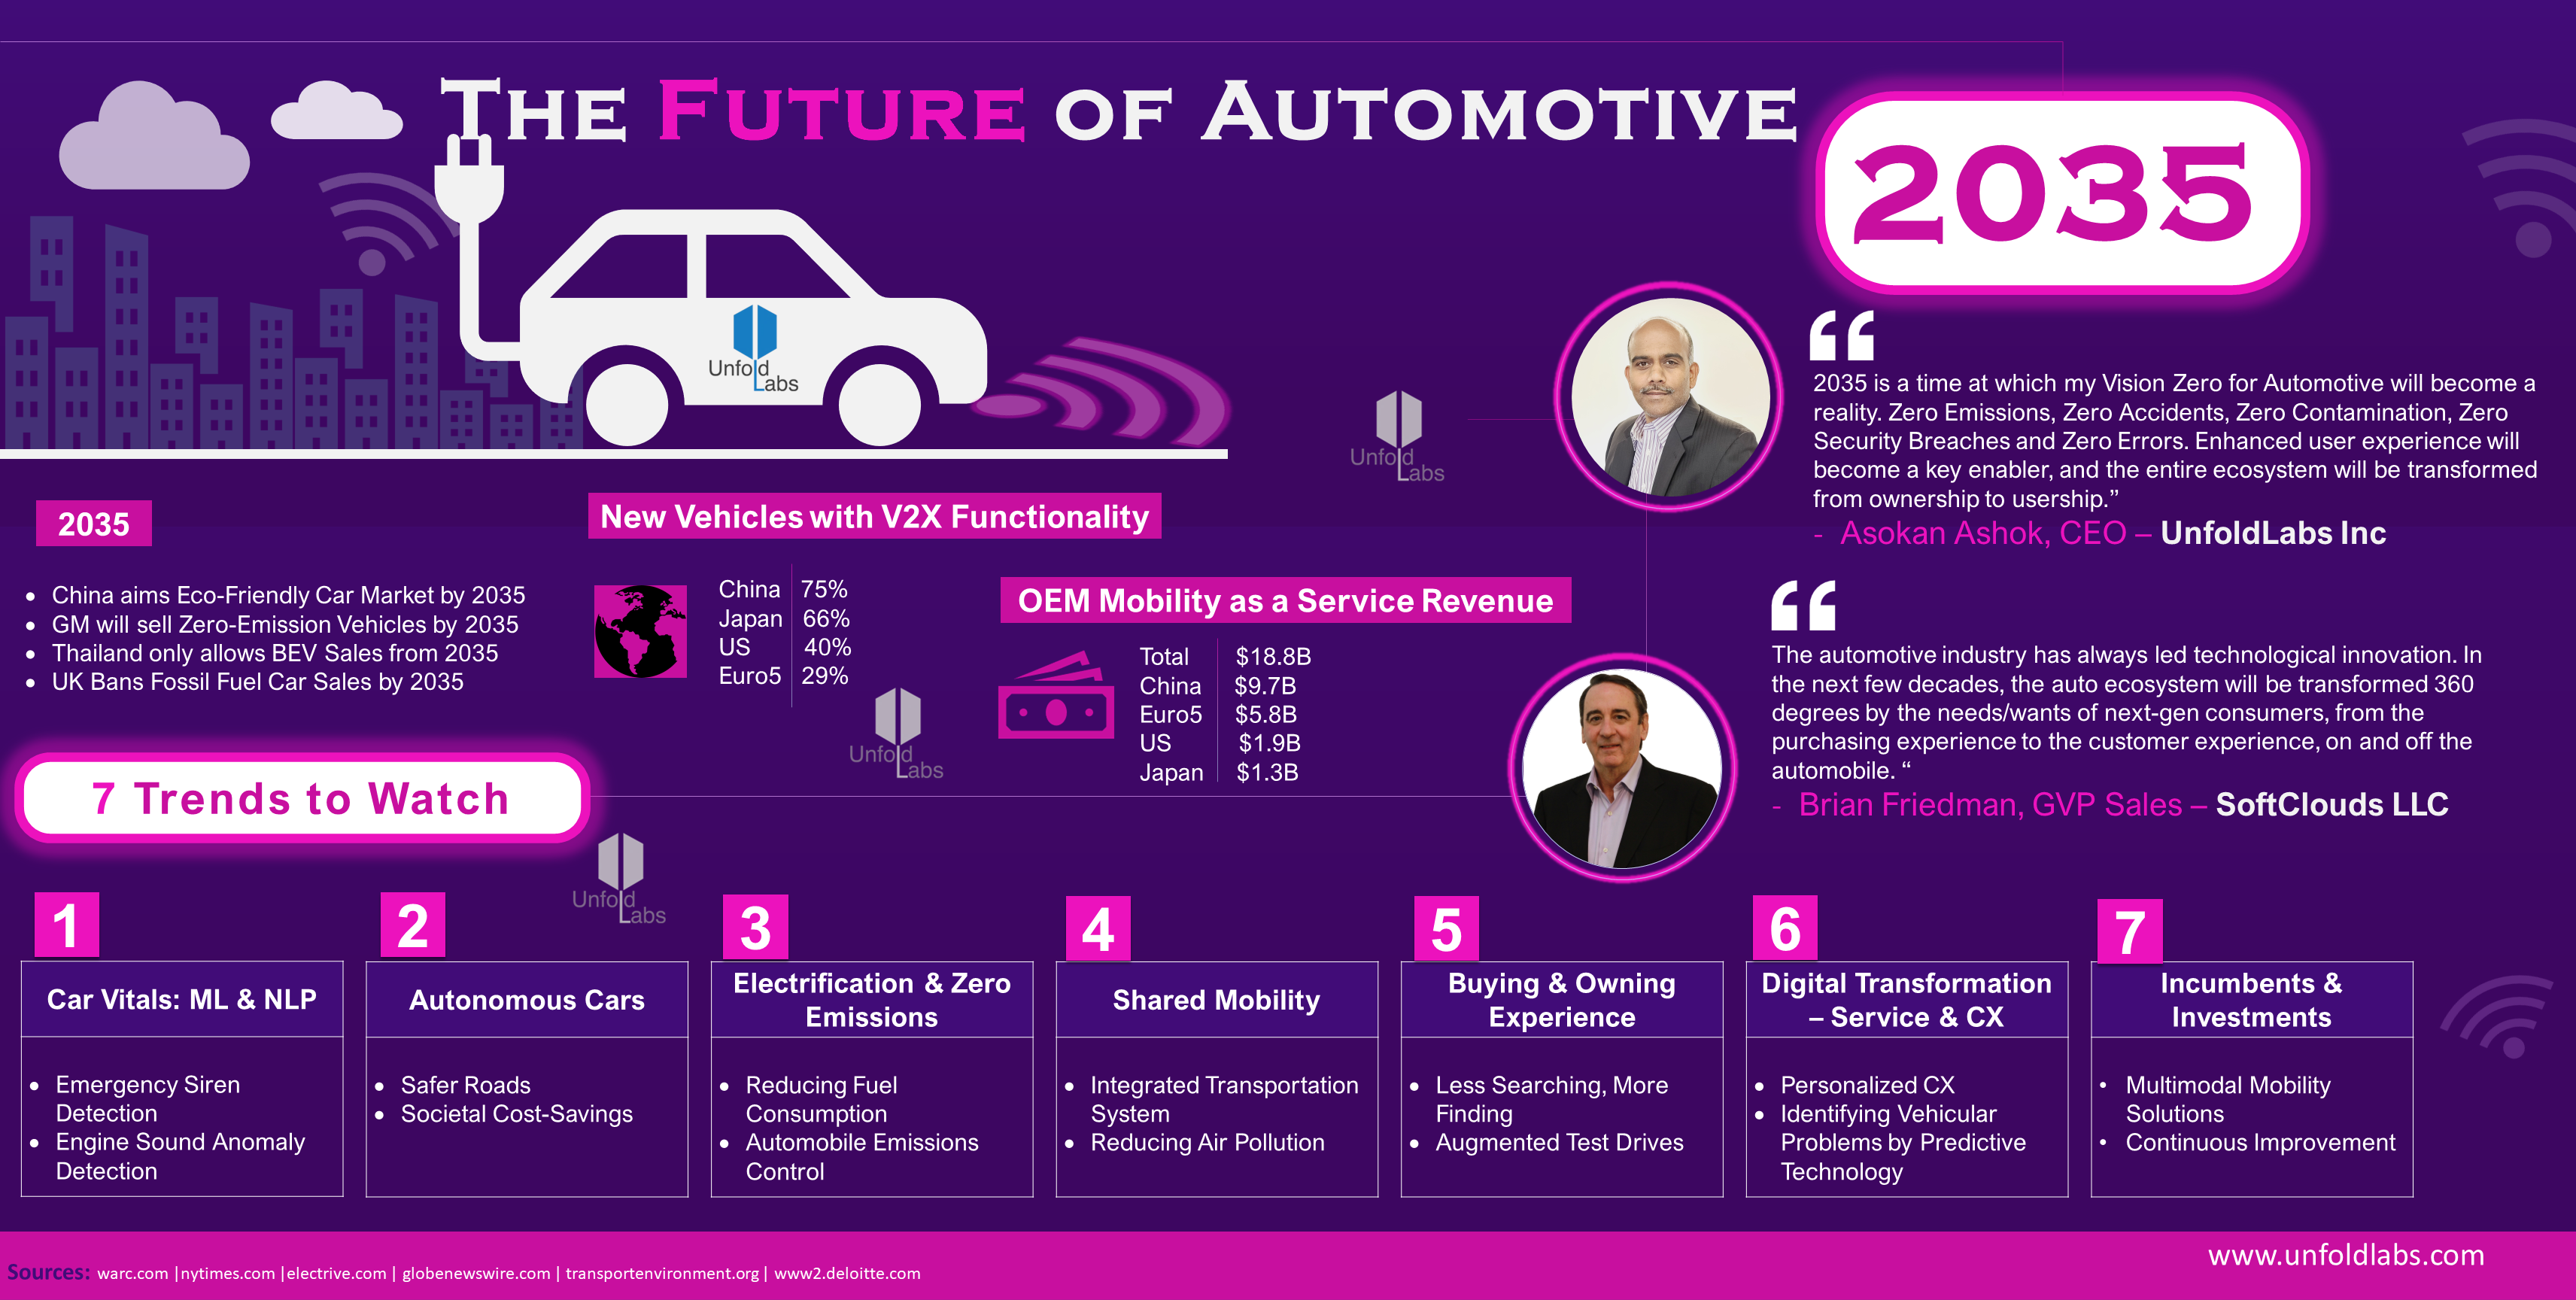 The Future of Automotive 2035